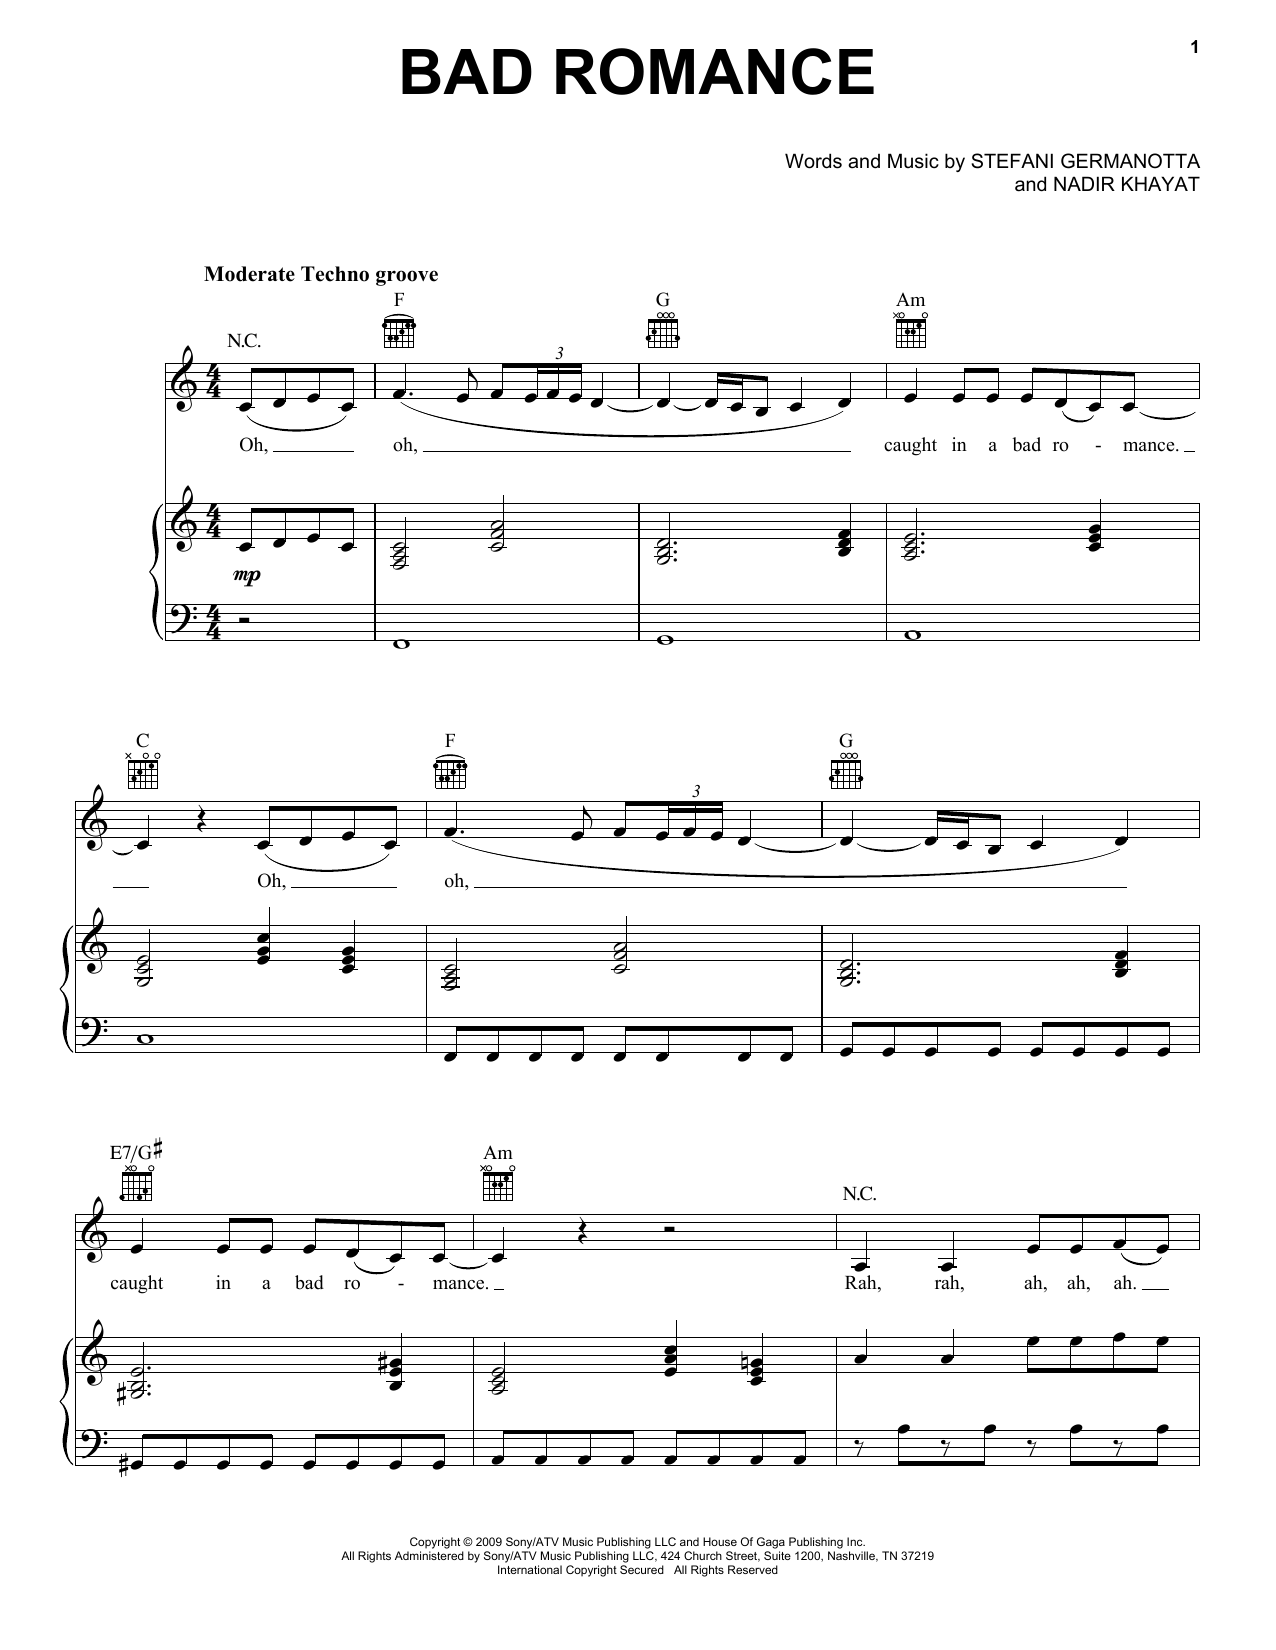 Lady Gaga Bad Romance Sheet Music Notes & Chords for Alto Saxophone - Download or Print PDF